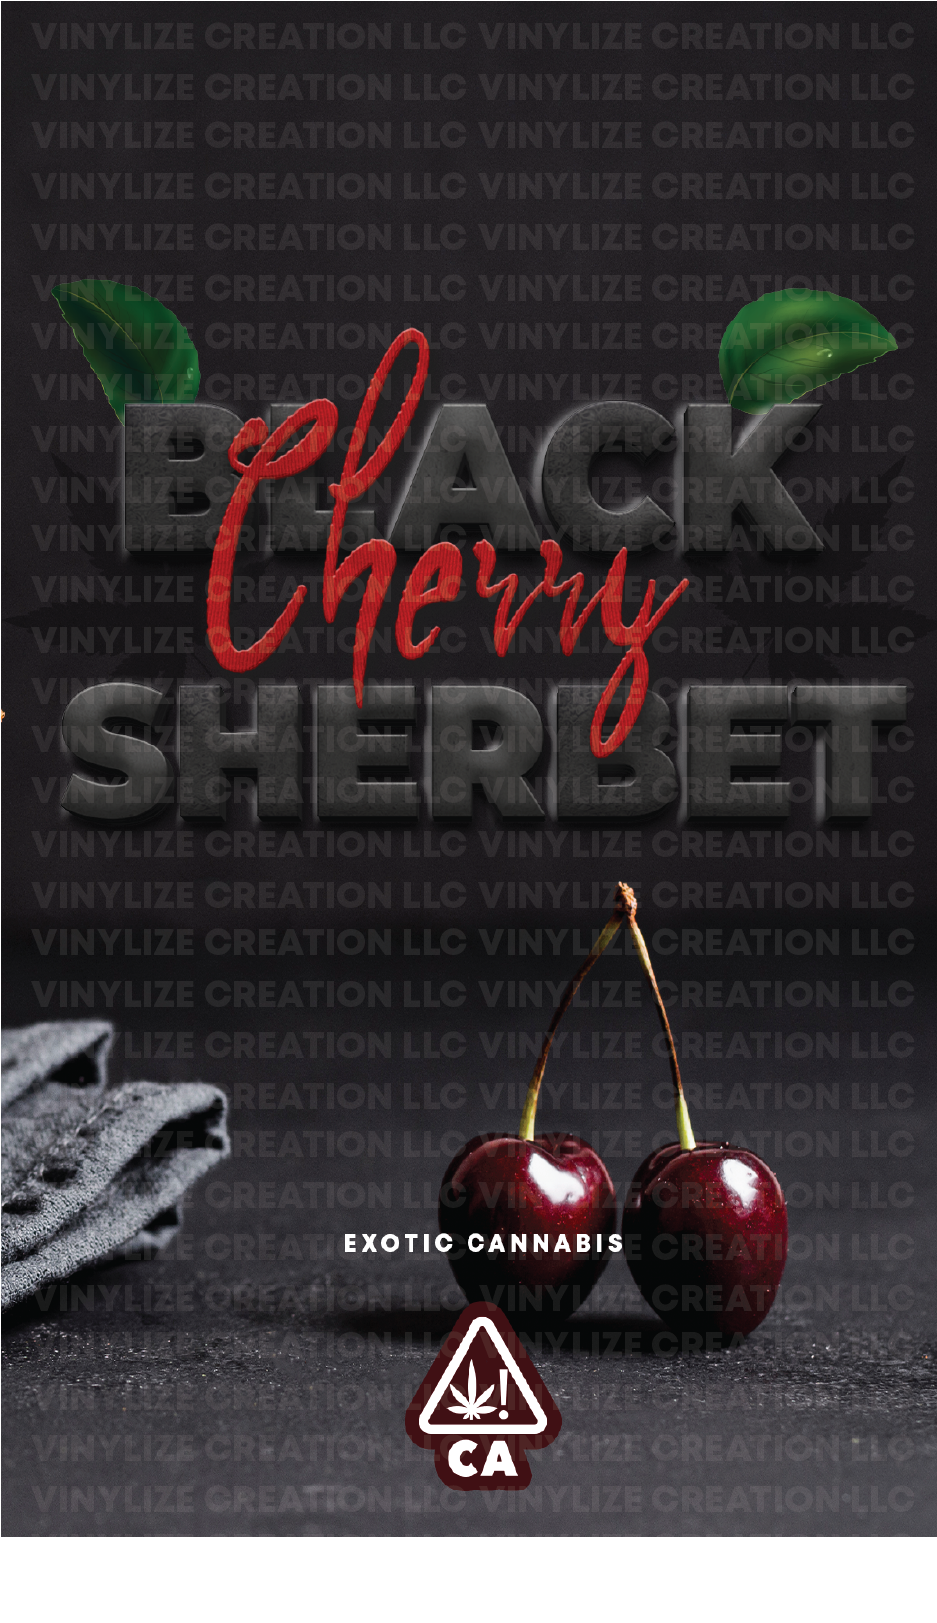 Custom Mylar Bag - Black Cherry Sherbet